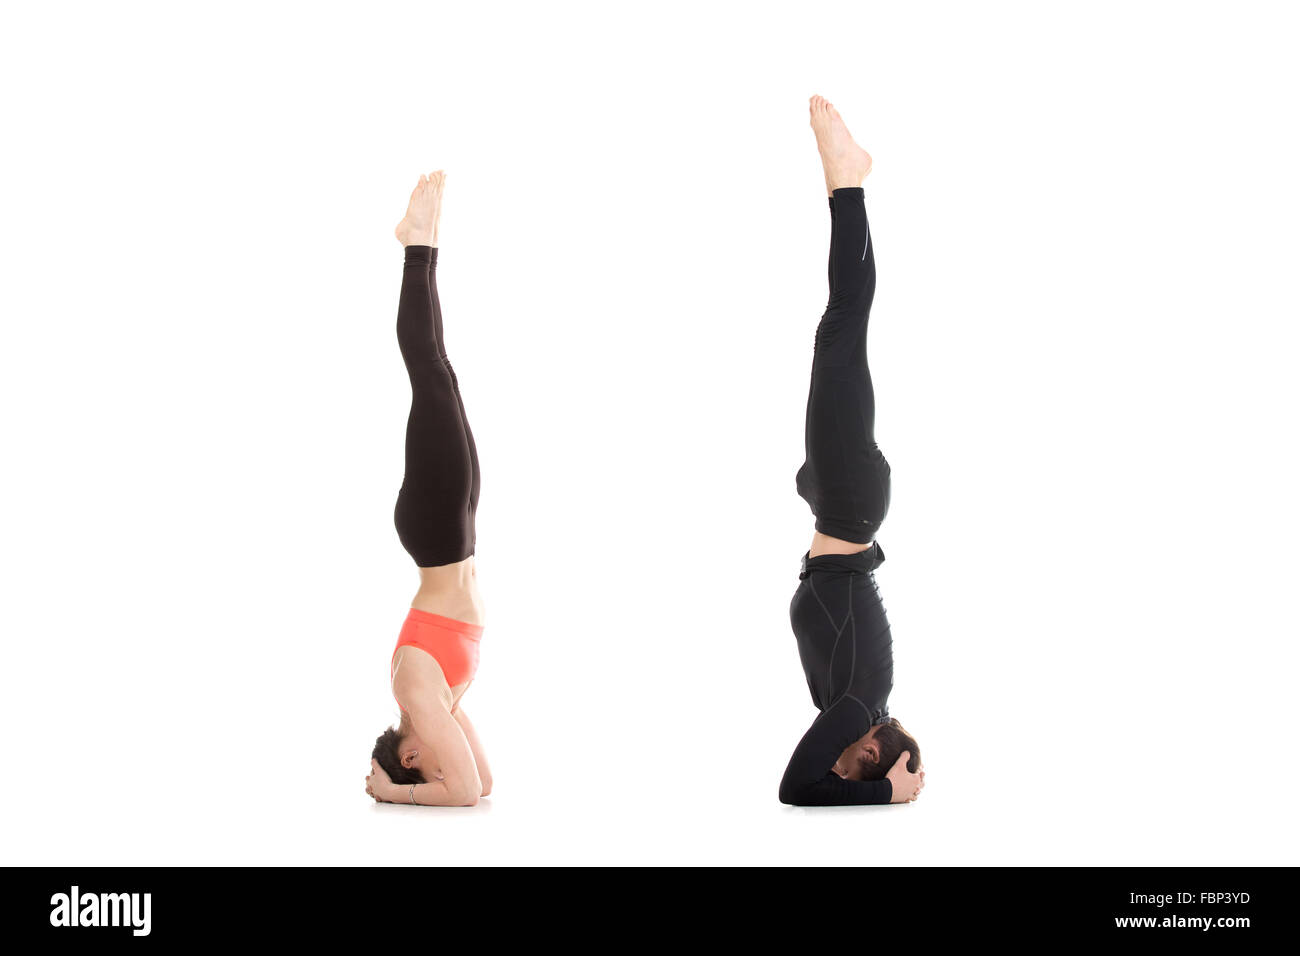 Paired Yoga on a Blue Background Stock Photo - Image of flexible, asana:  30102714